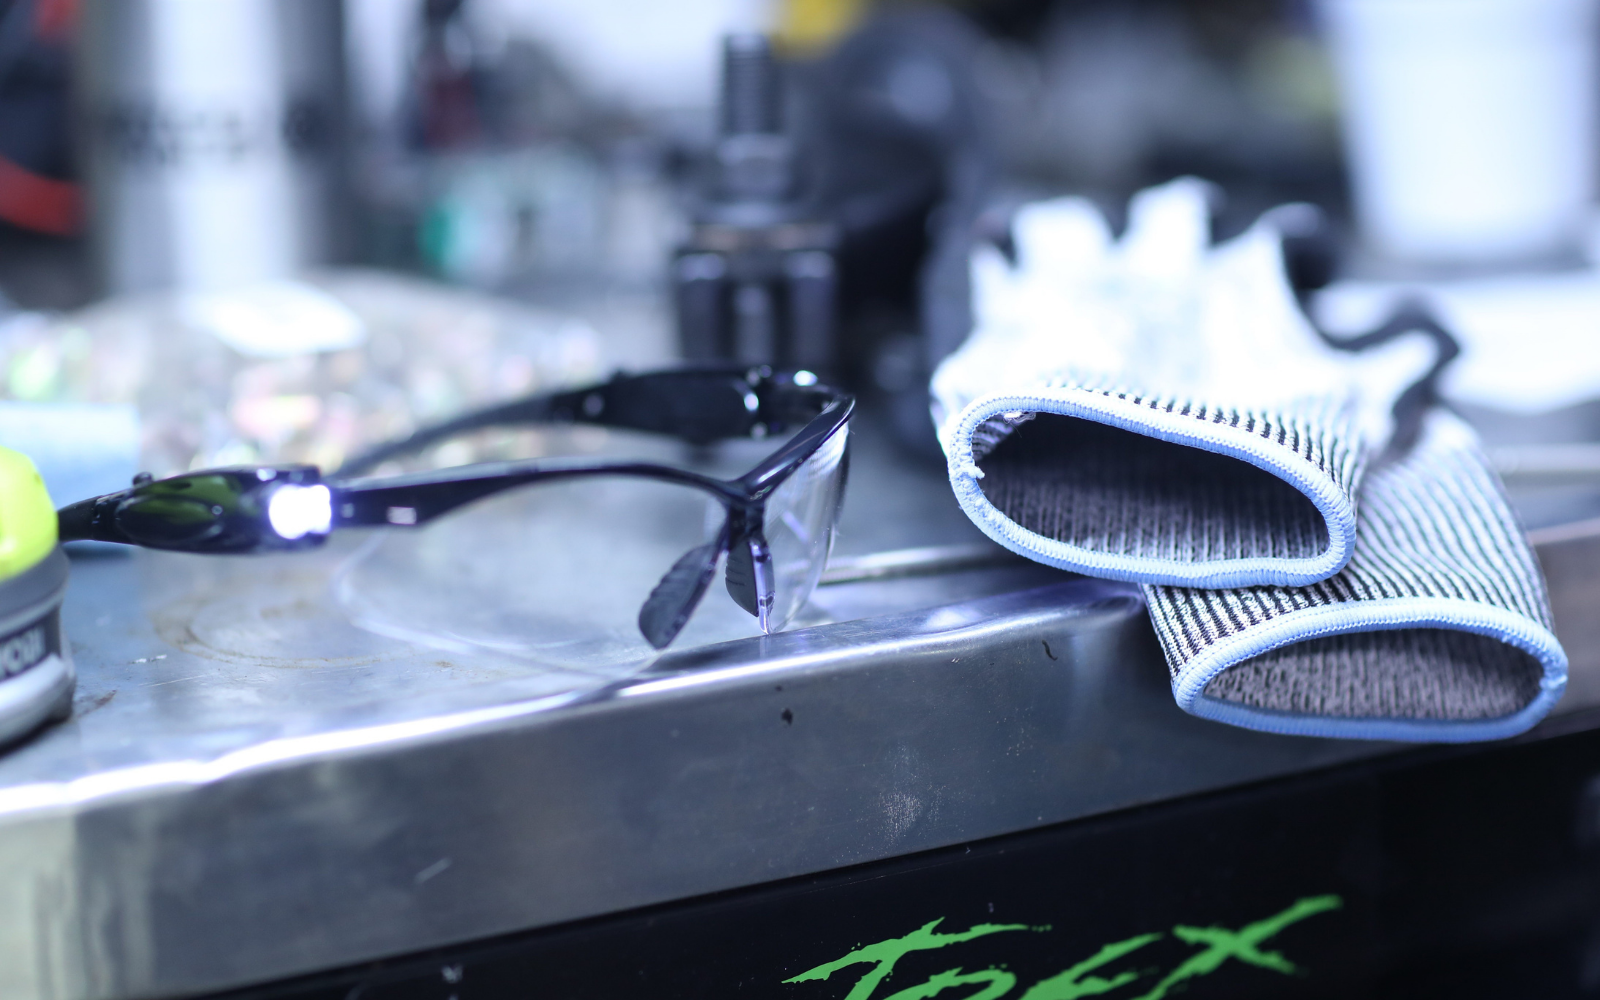  Pyramex OTS Over Prescription Glasses Safety Glasses for  Welding : Tools & Home Improvement